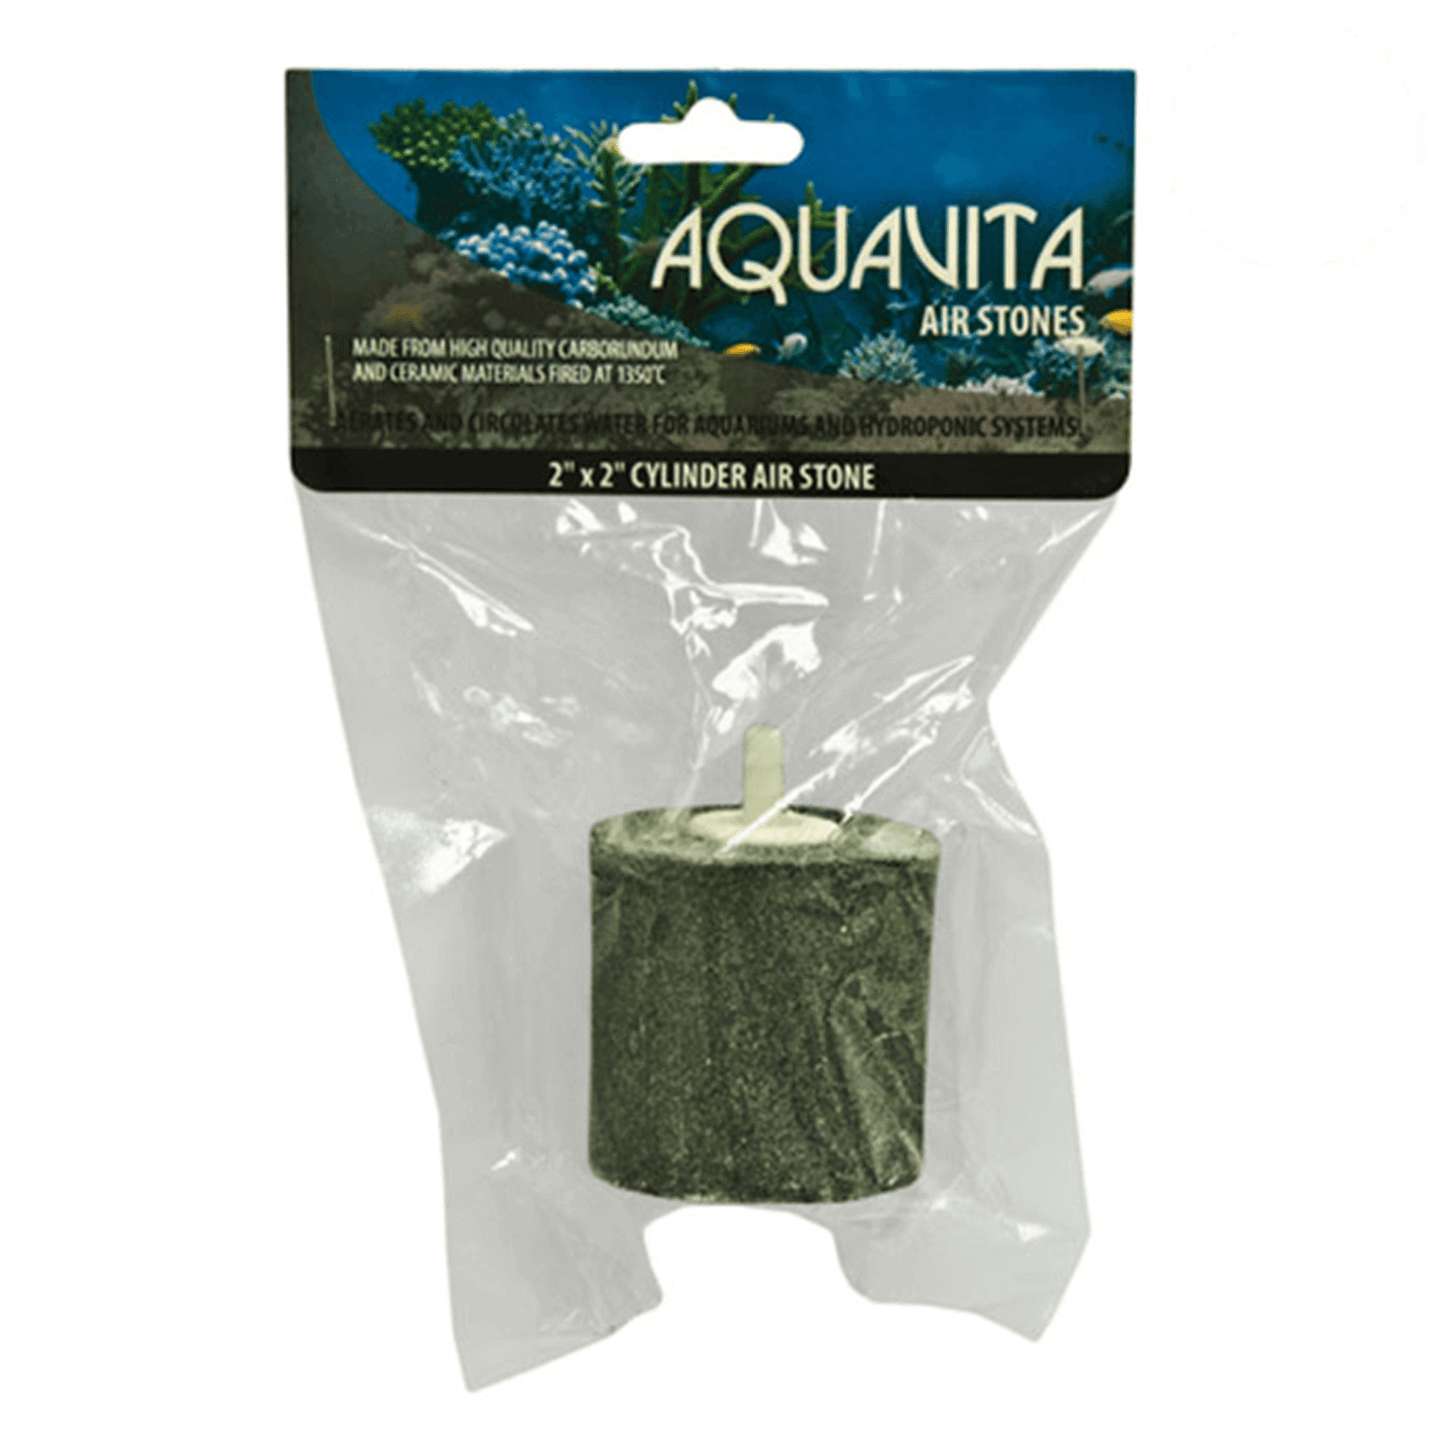 AquaVita 2'' x 2'' Cylinder Air Stone 850002 Planting & Watering